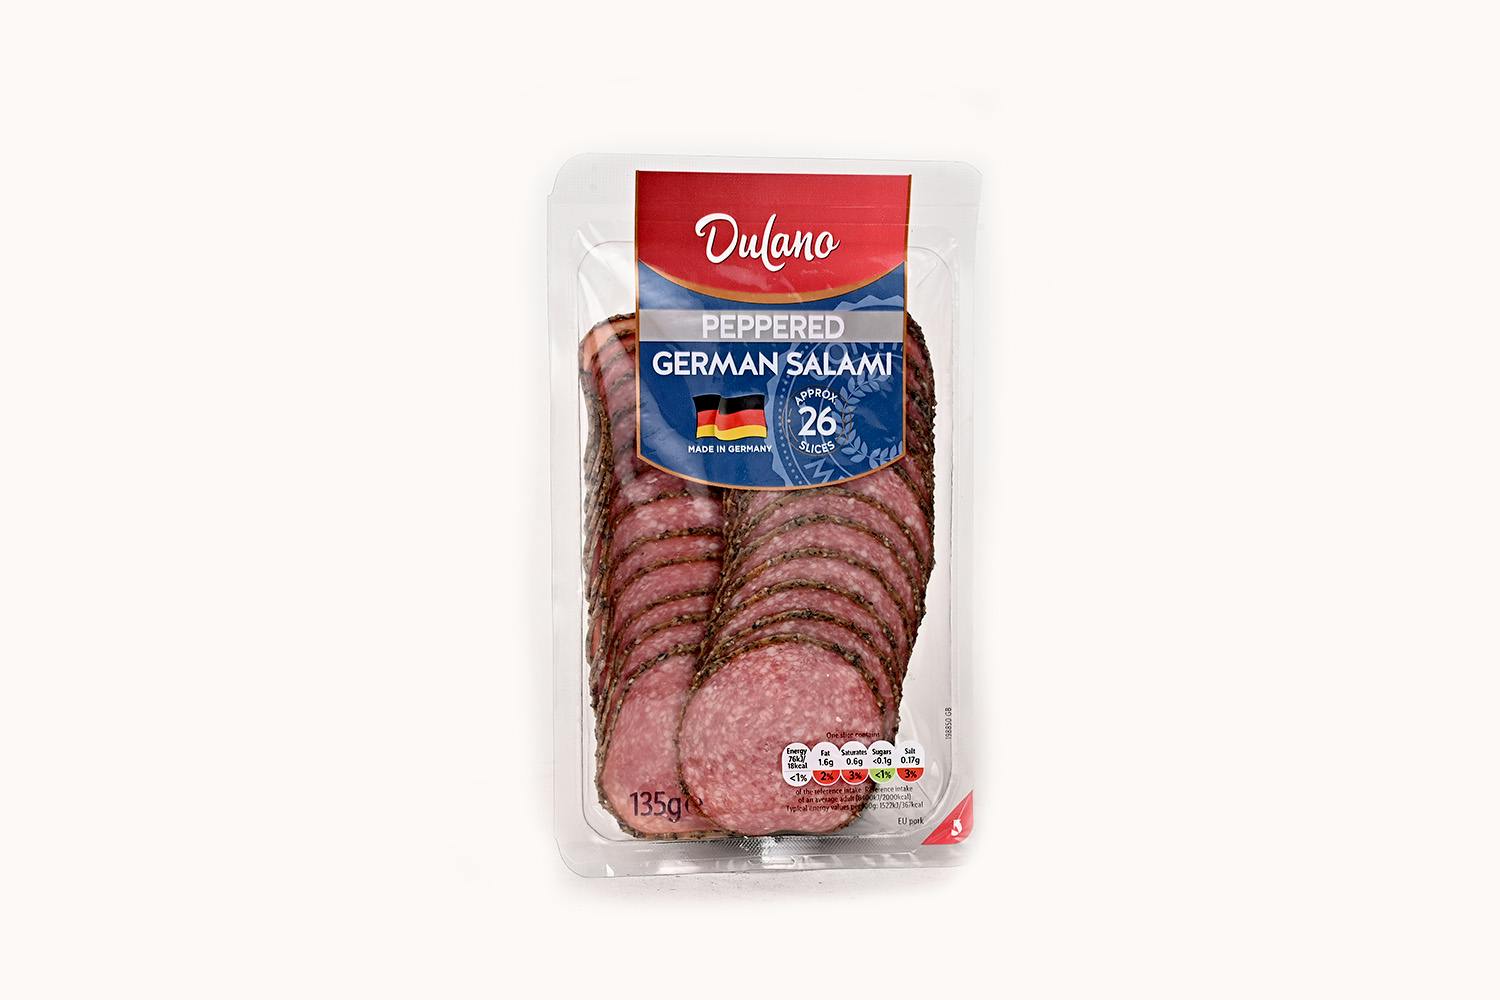 Dulano Peppered German Salami